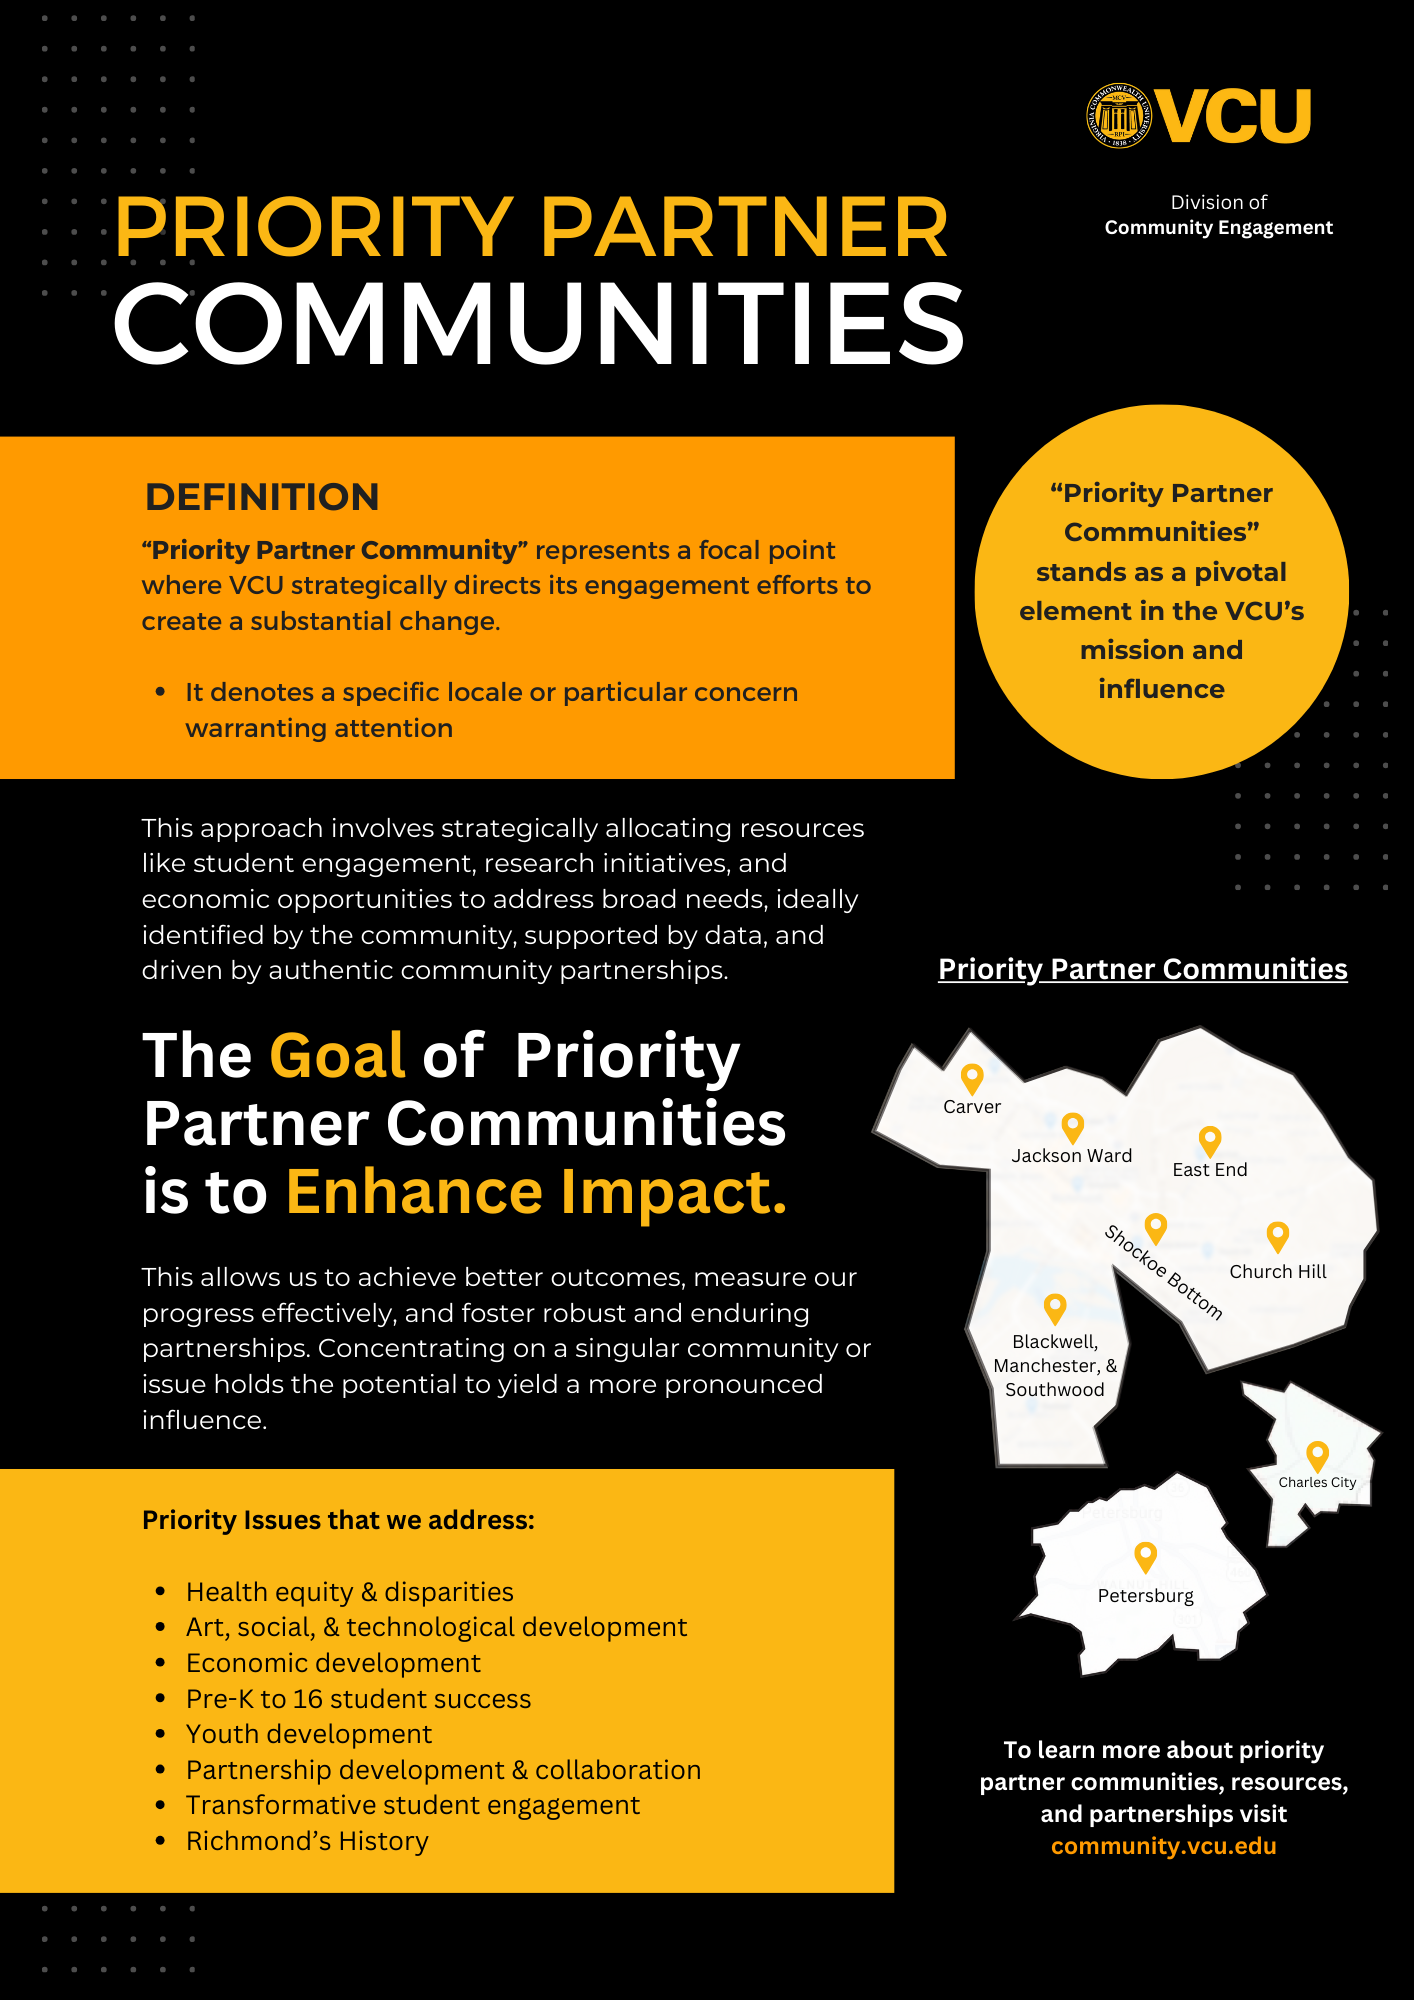 Description of priority partner communities